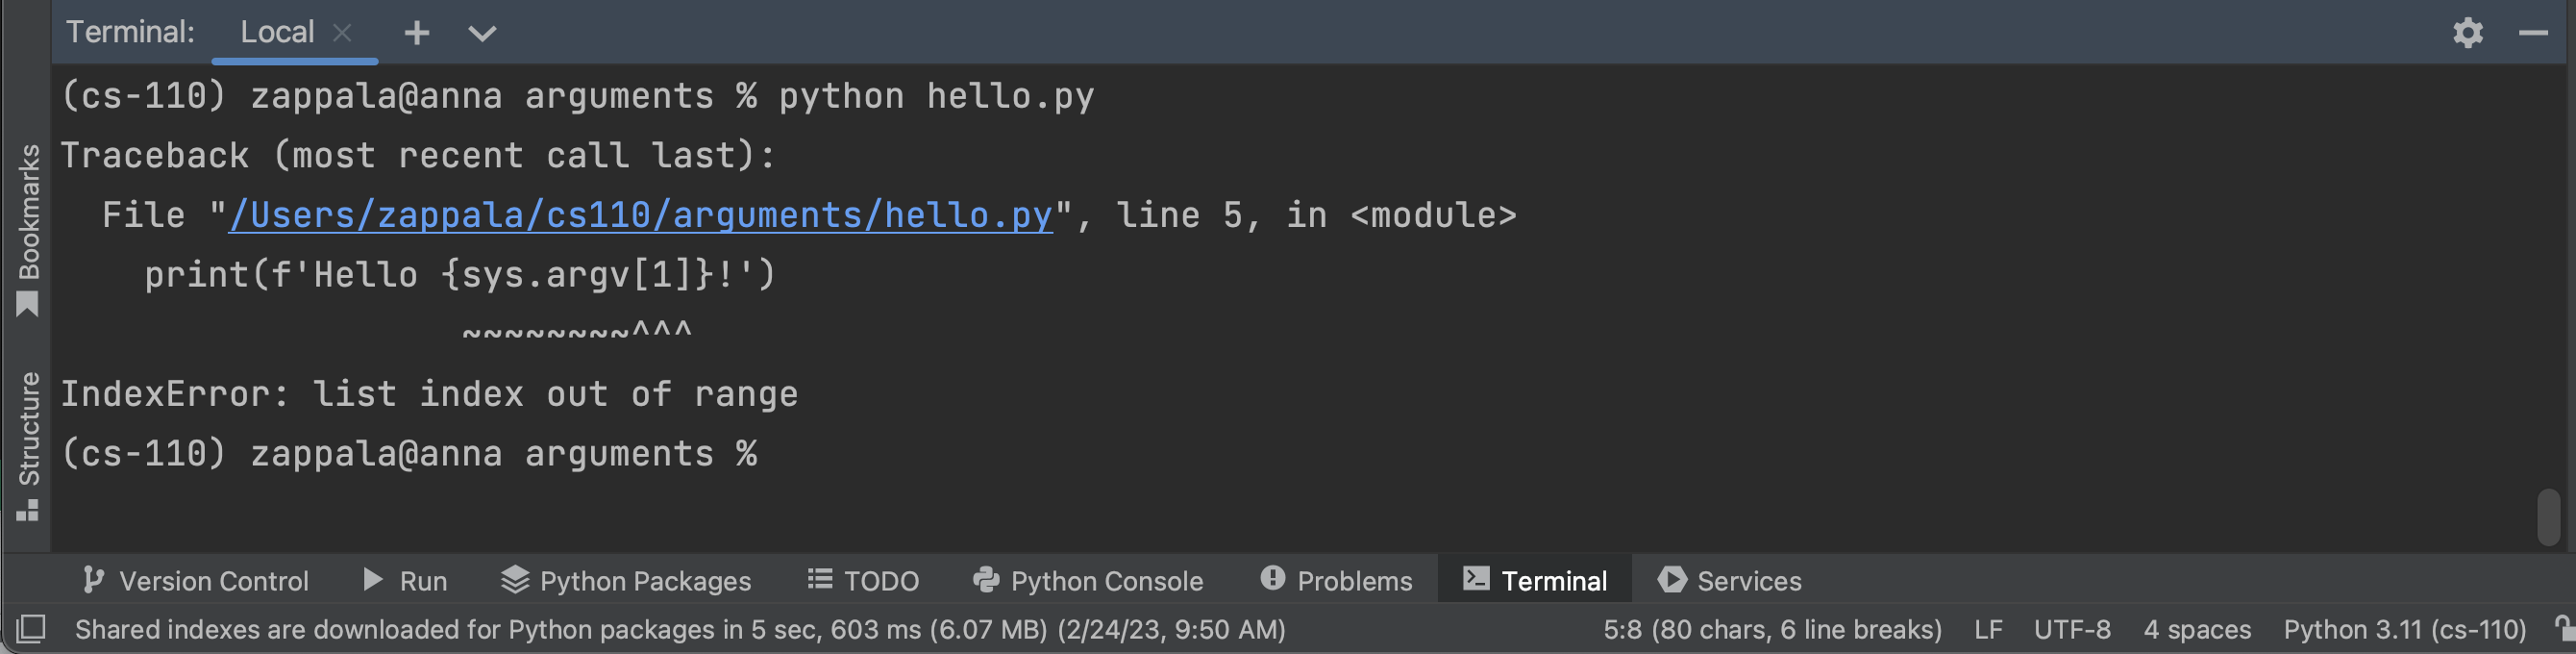 python hello.py causes an error